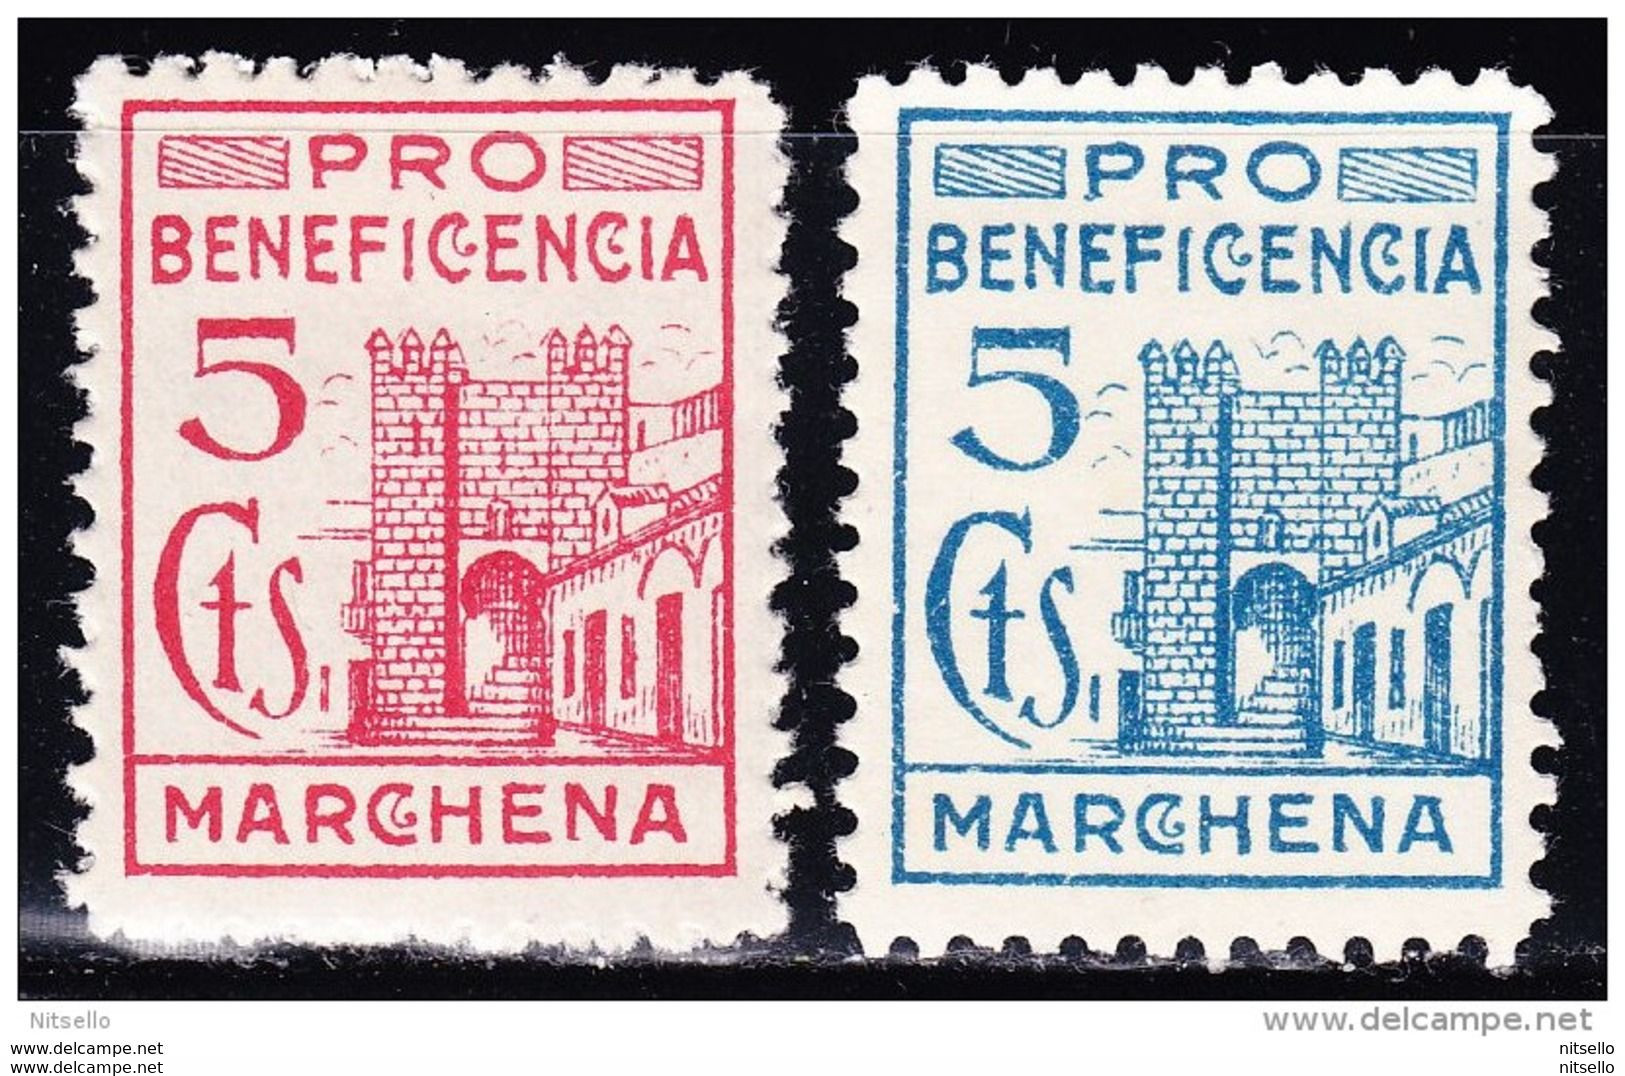 LOTE 2112E  ///   (C300) MARCHENA (SEVILLA) Nº 1 Y 2 FESOFI 5 CTS. ROJO Y 5 CTS. AZUL PRO BENEFICENCIA - Spanish Civil War Labels